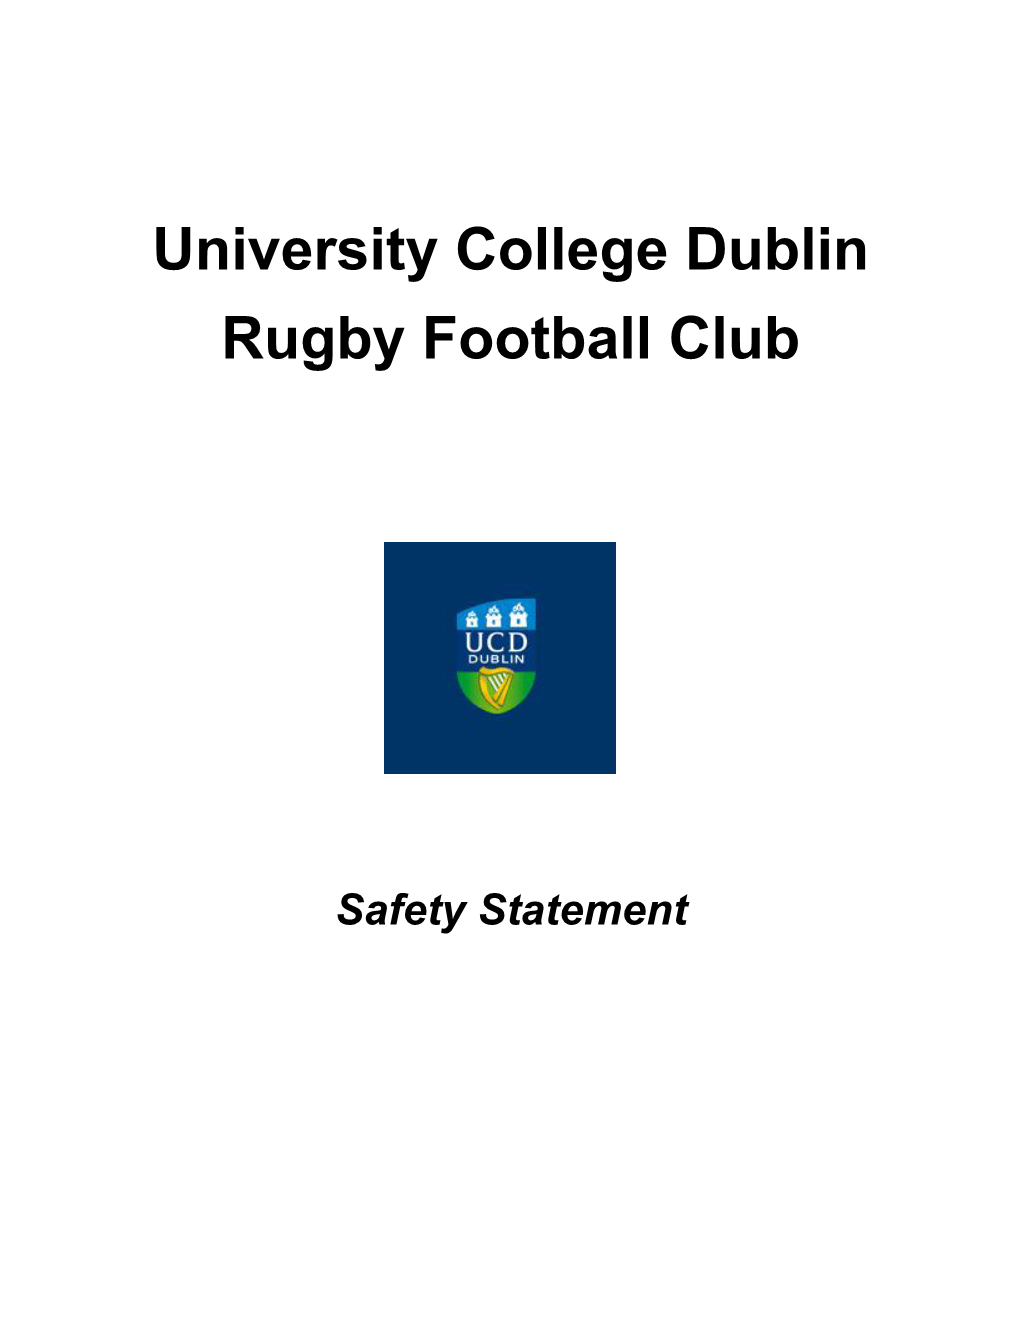 University College Dublin Rugby Football Club